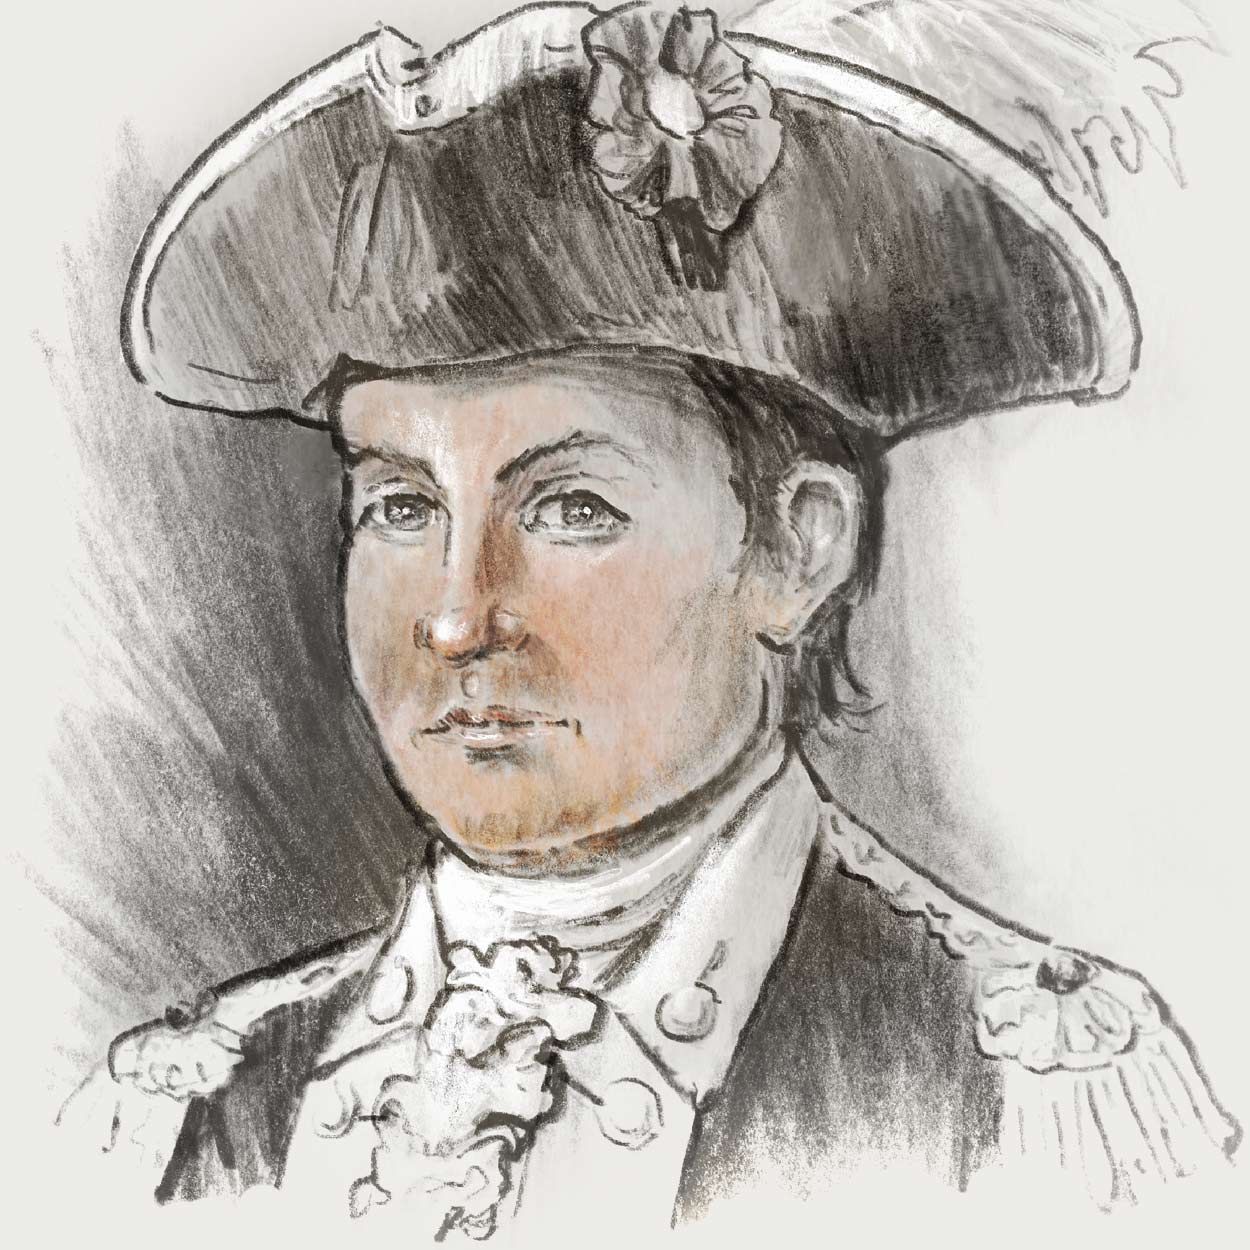 Drawn portrait of Christopher Greene